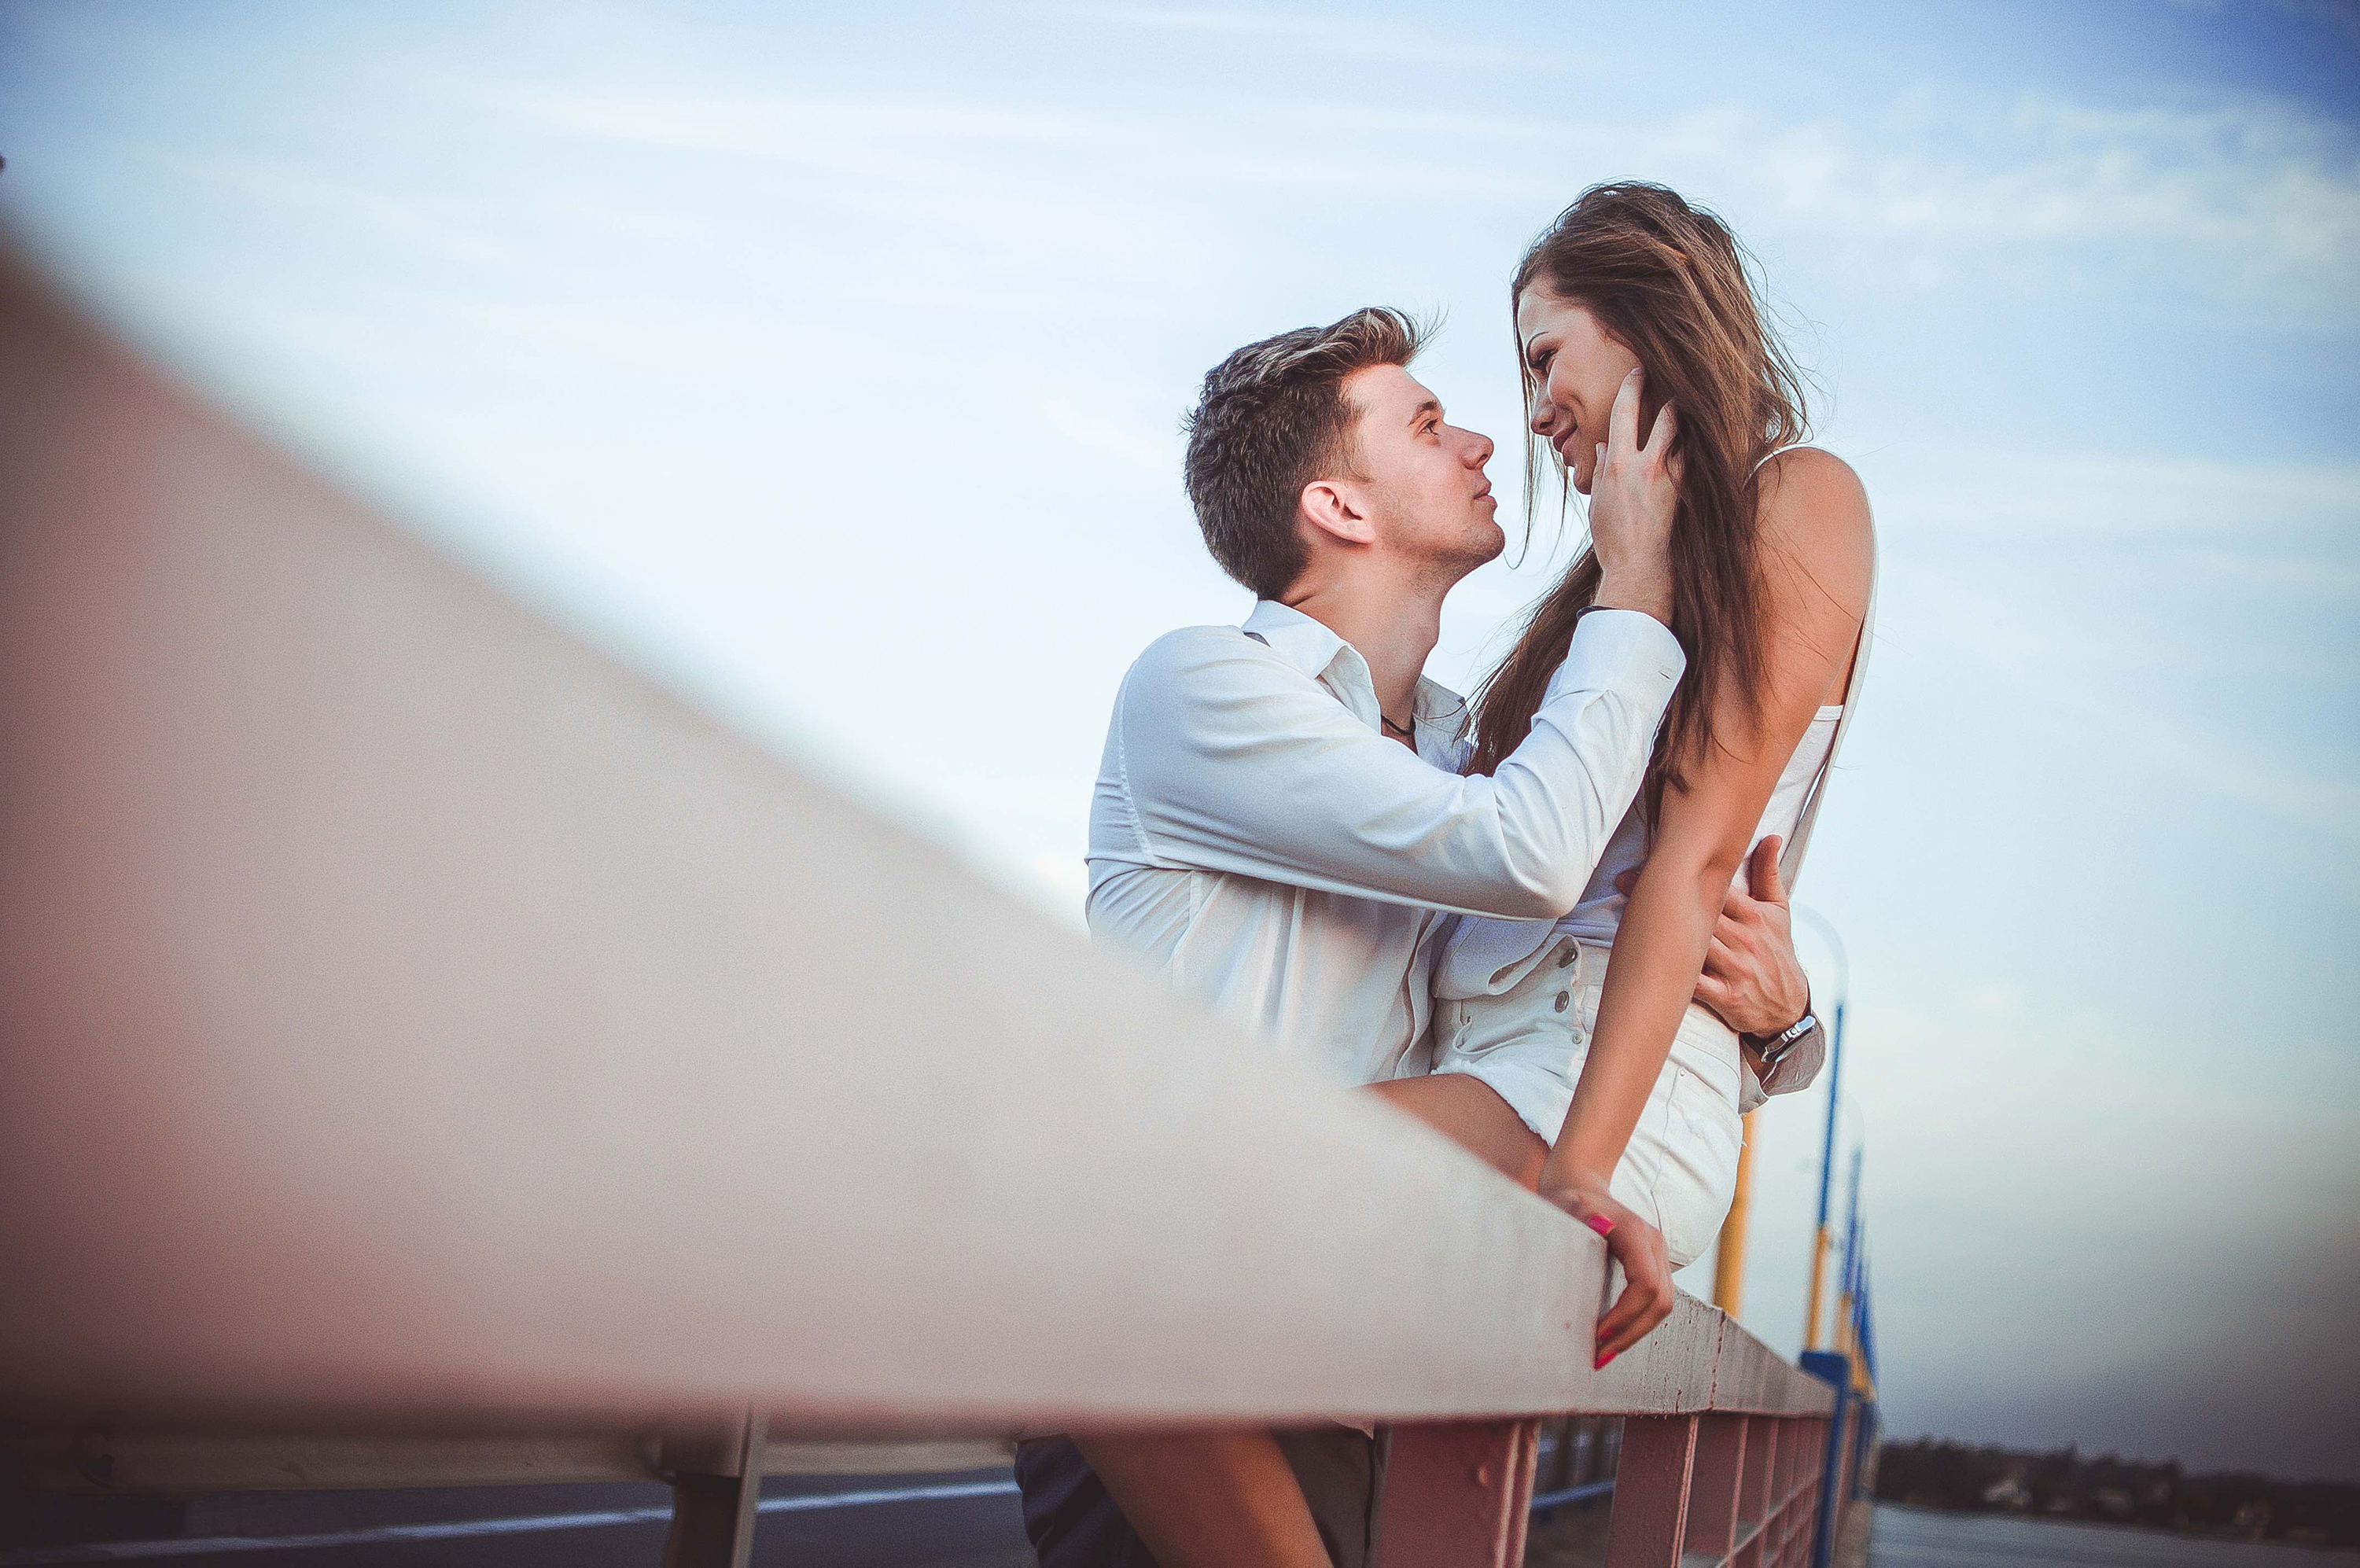 Speed Dating約會Tips: 真性情男人唔等於壞男人 | Golden Matching 黃金單對單約會Speed Dating譜寫你的戀曲